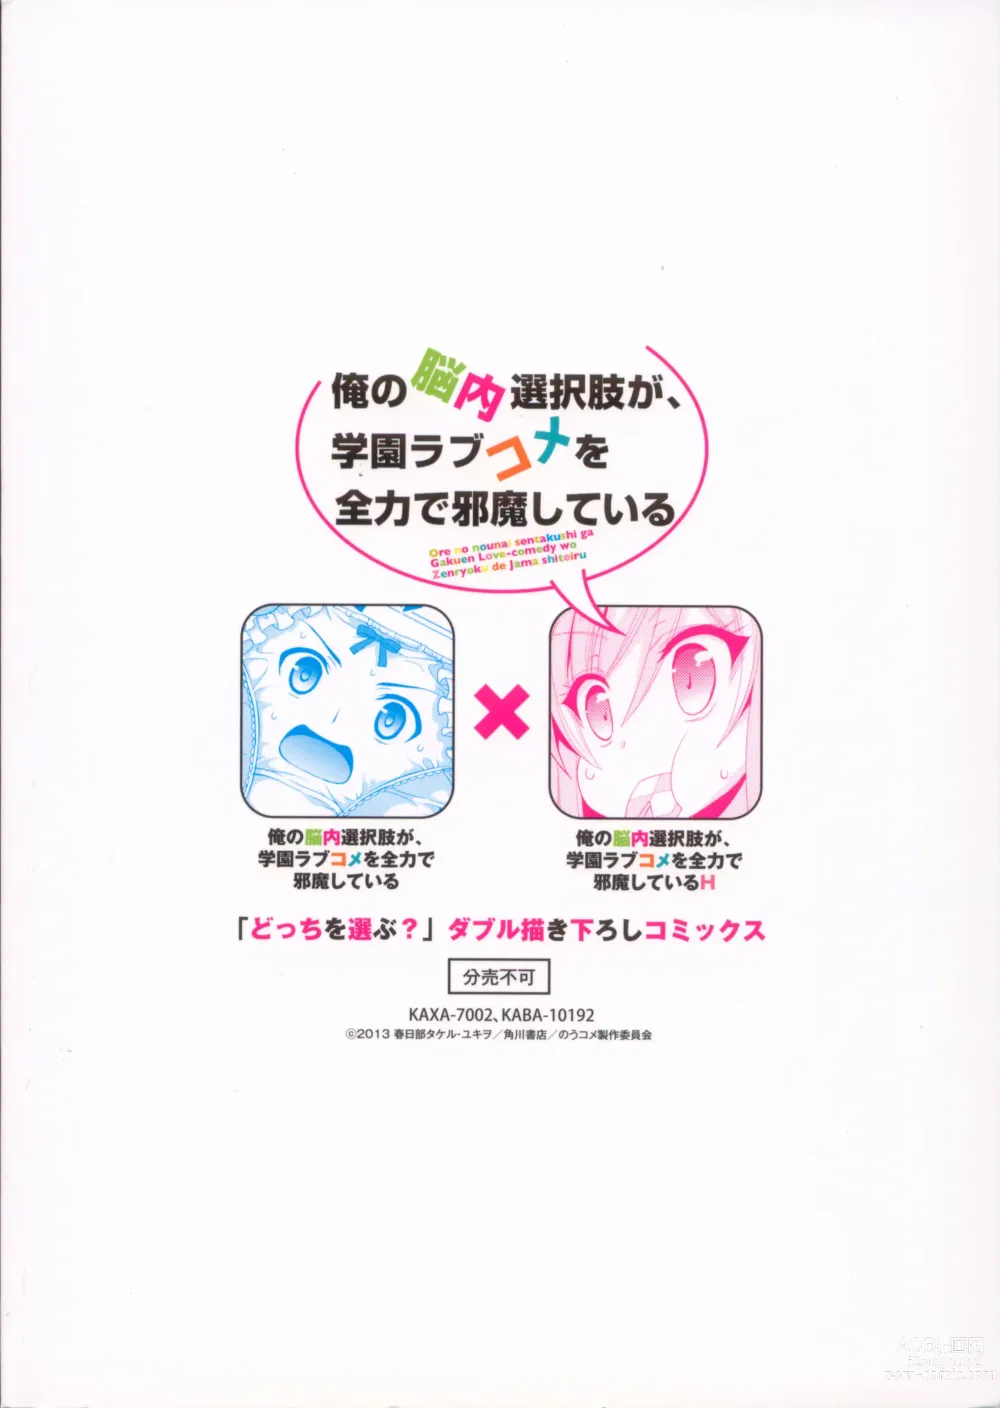 Page 2 of manga 「どっちを選ぶ?」ダブル描き下ろしコミックス Blu-ray＆DVD 第2巻 同梱特典